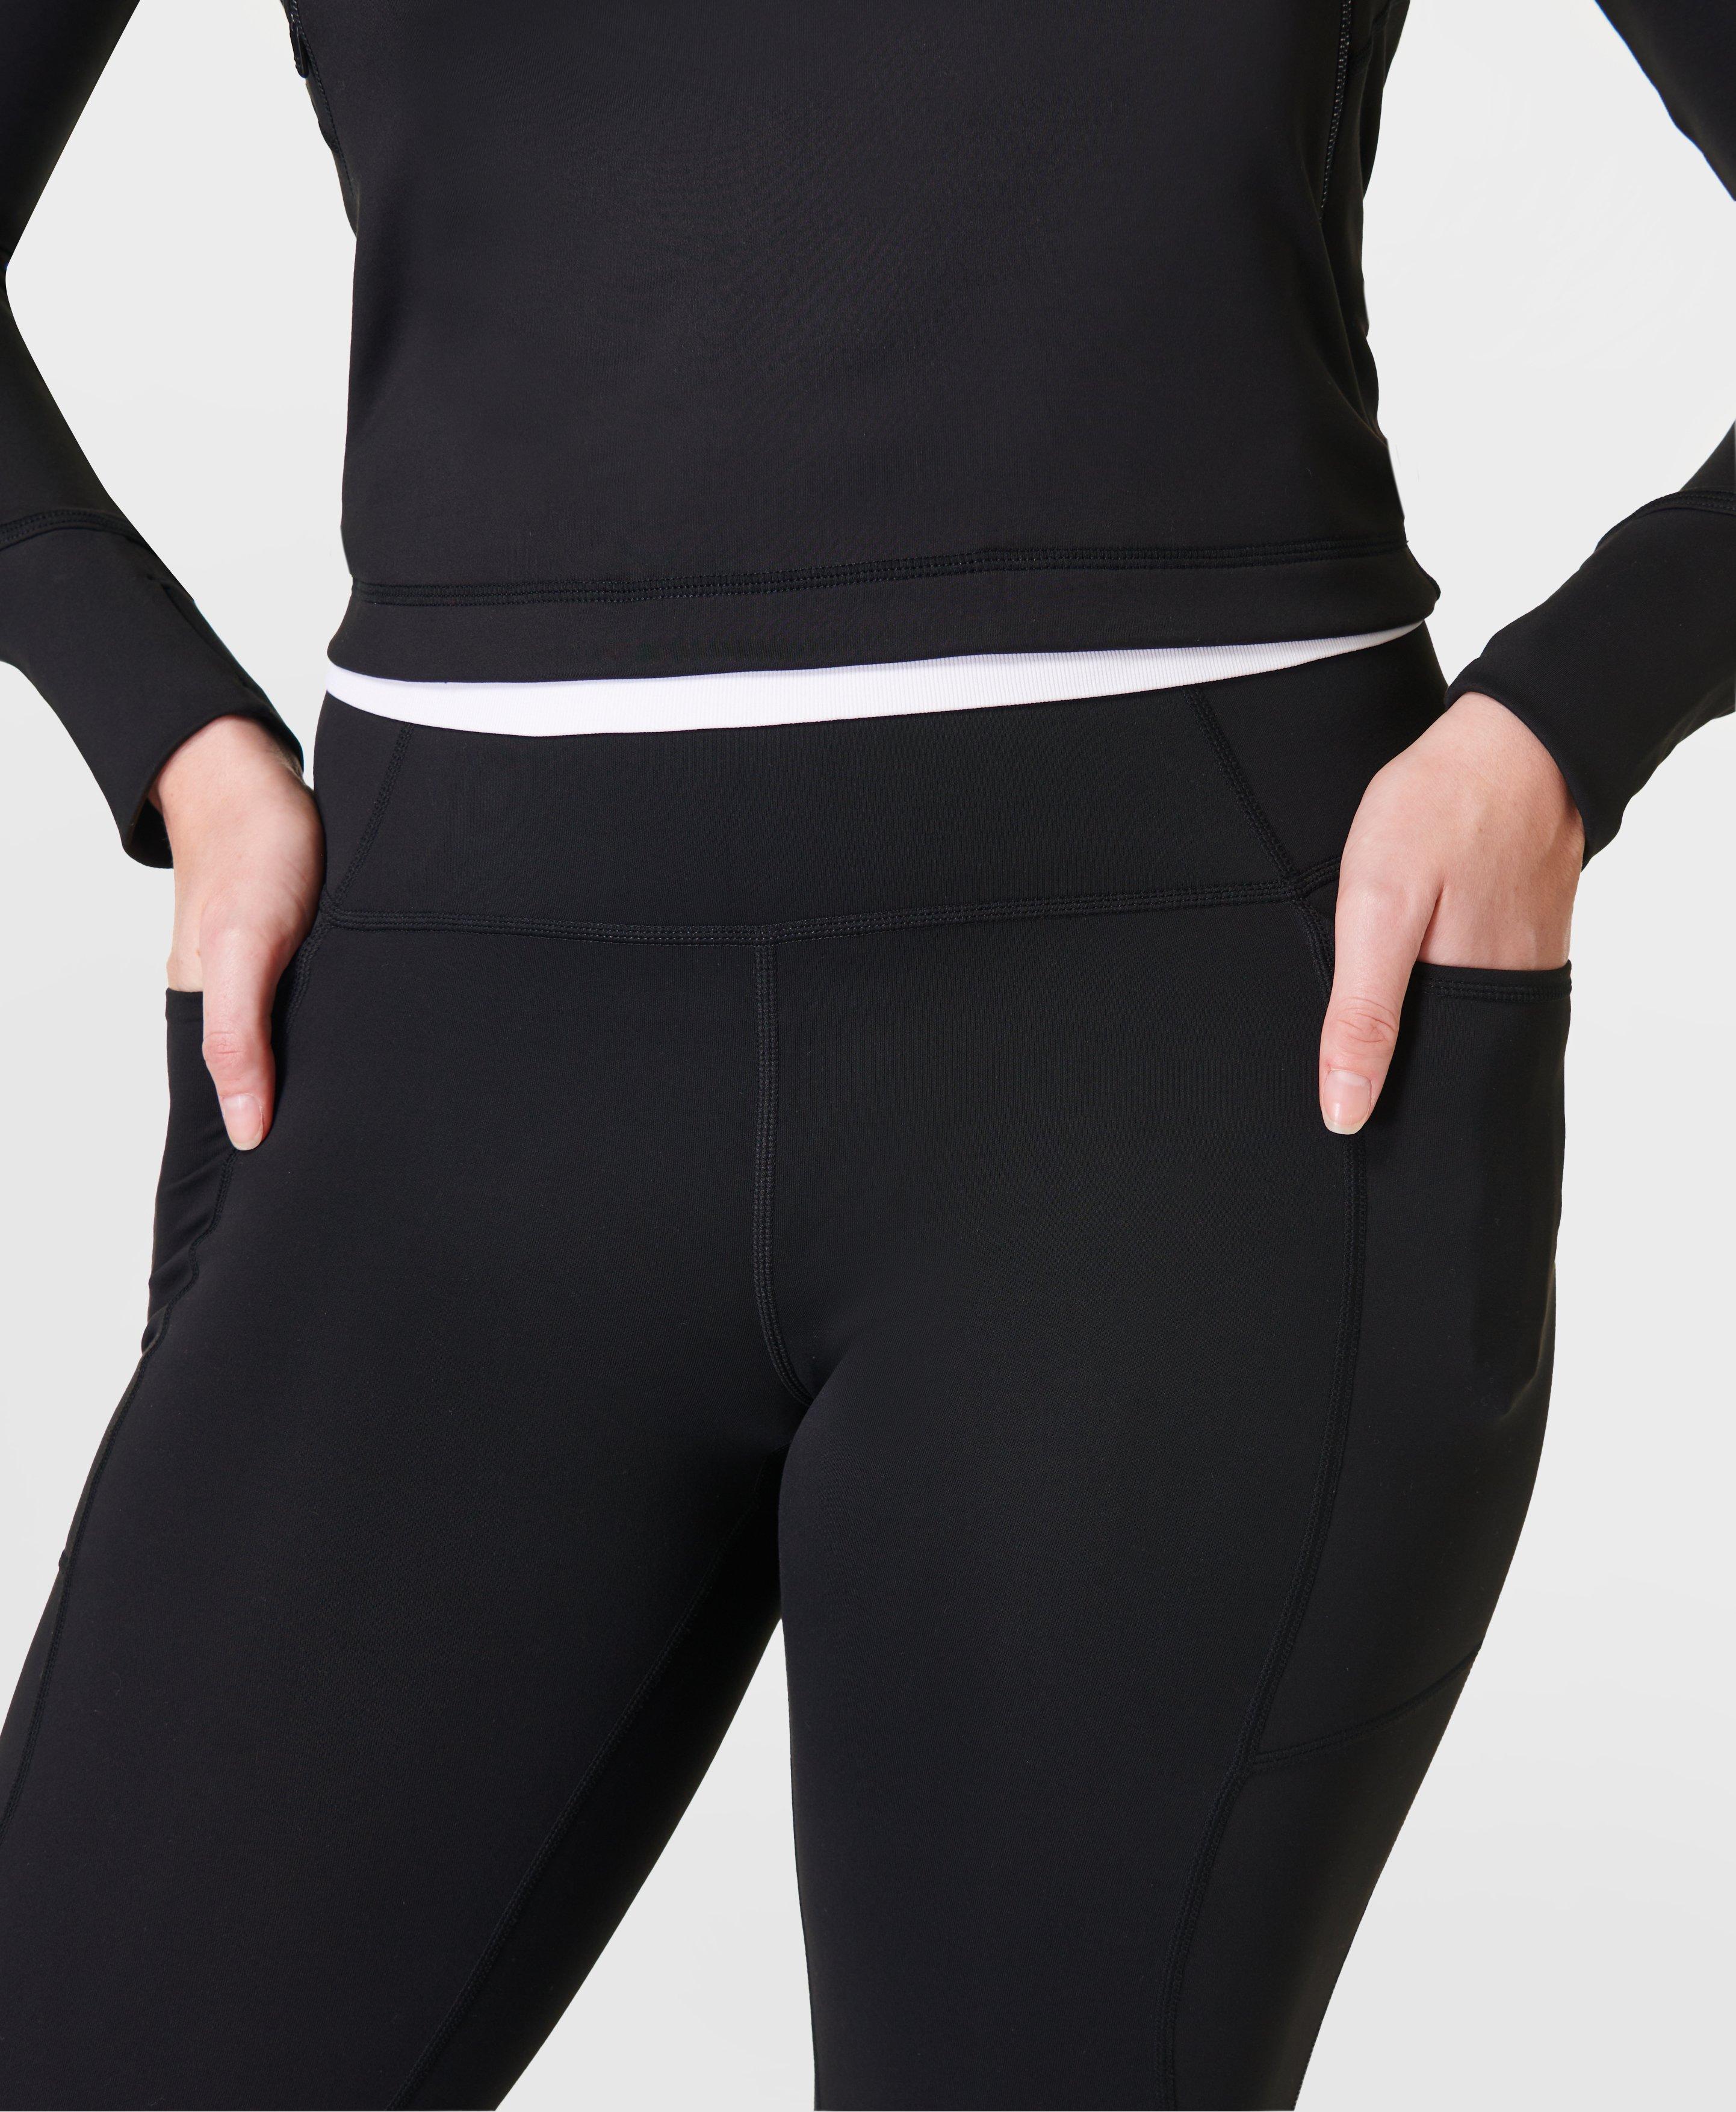 Sweaty Betty thermodynamic, black leggings with velvet stripes